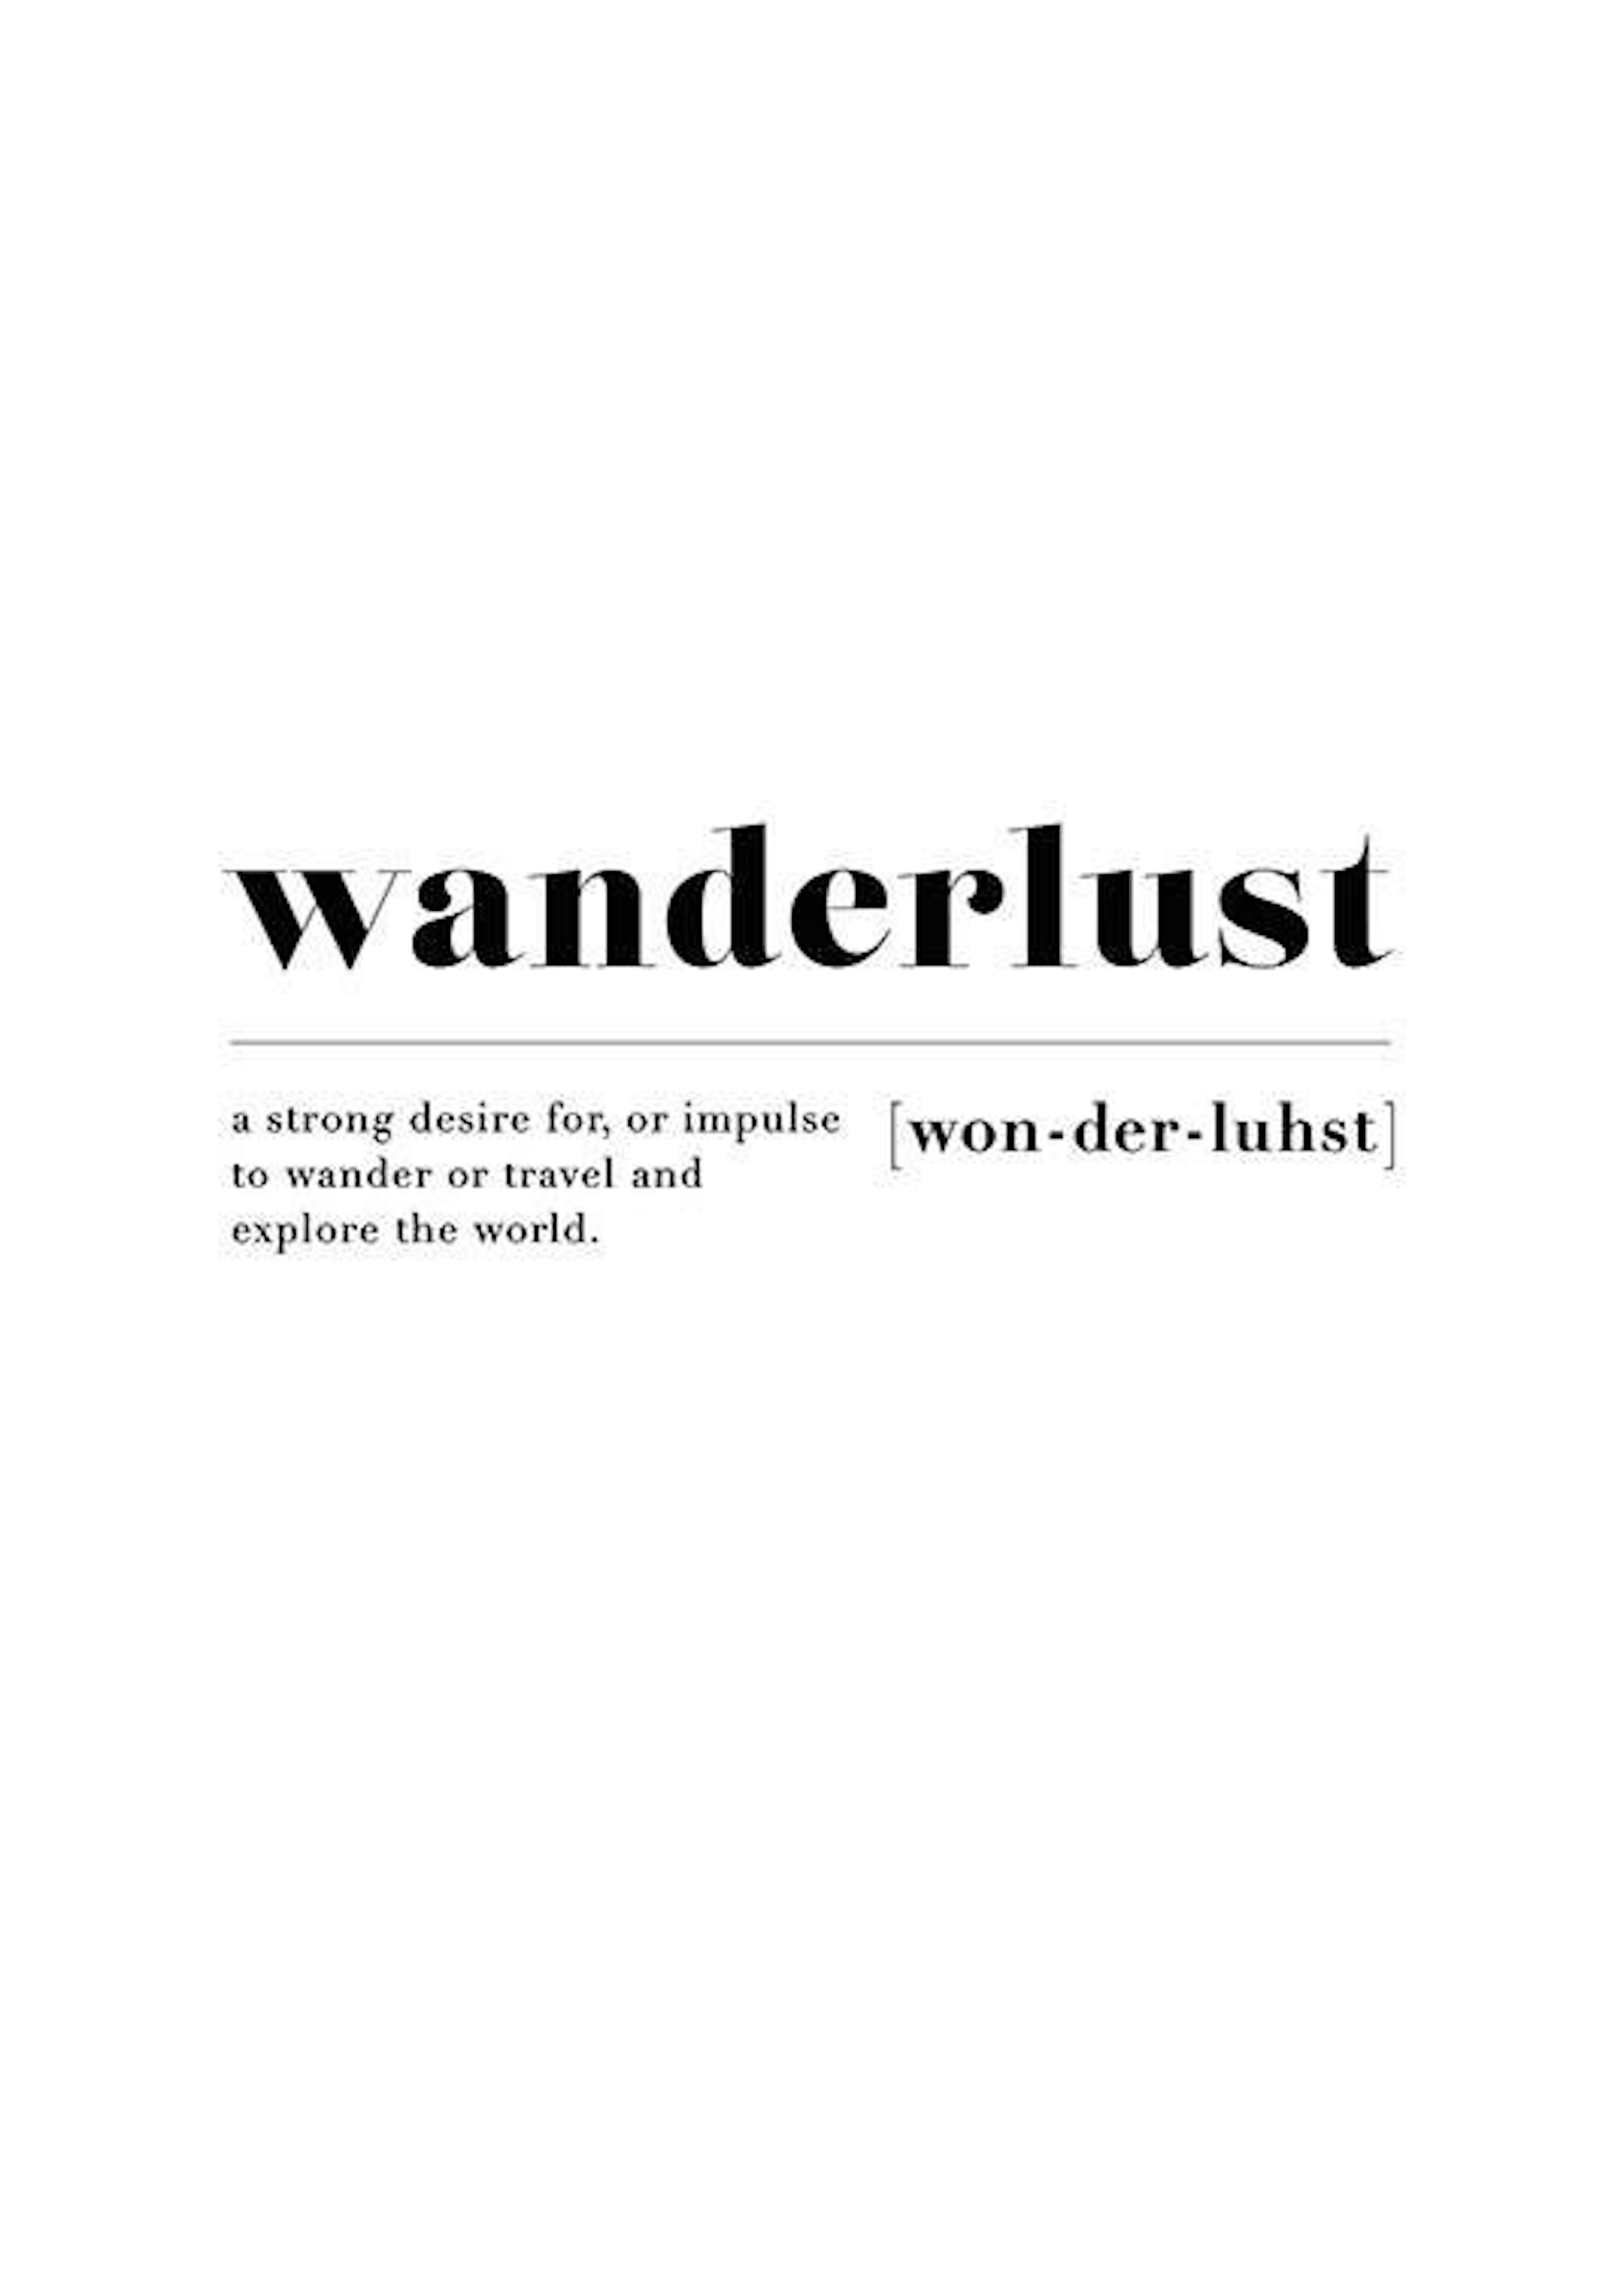 Wanderlust Print 0